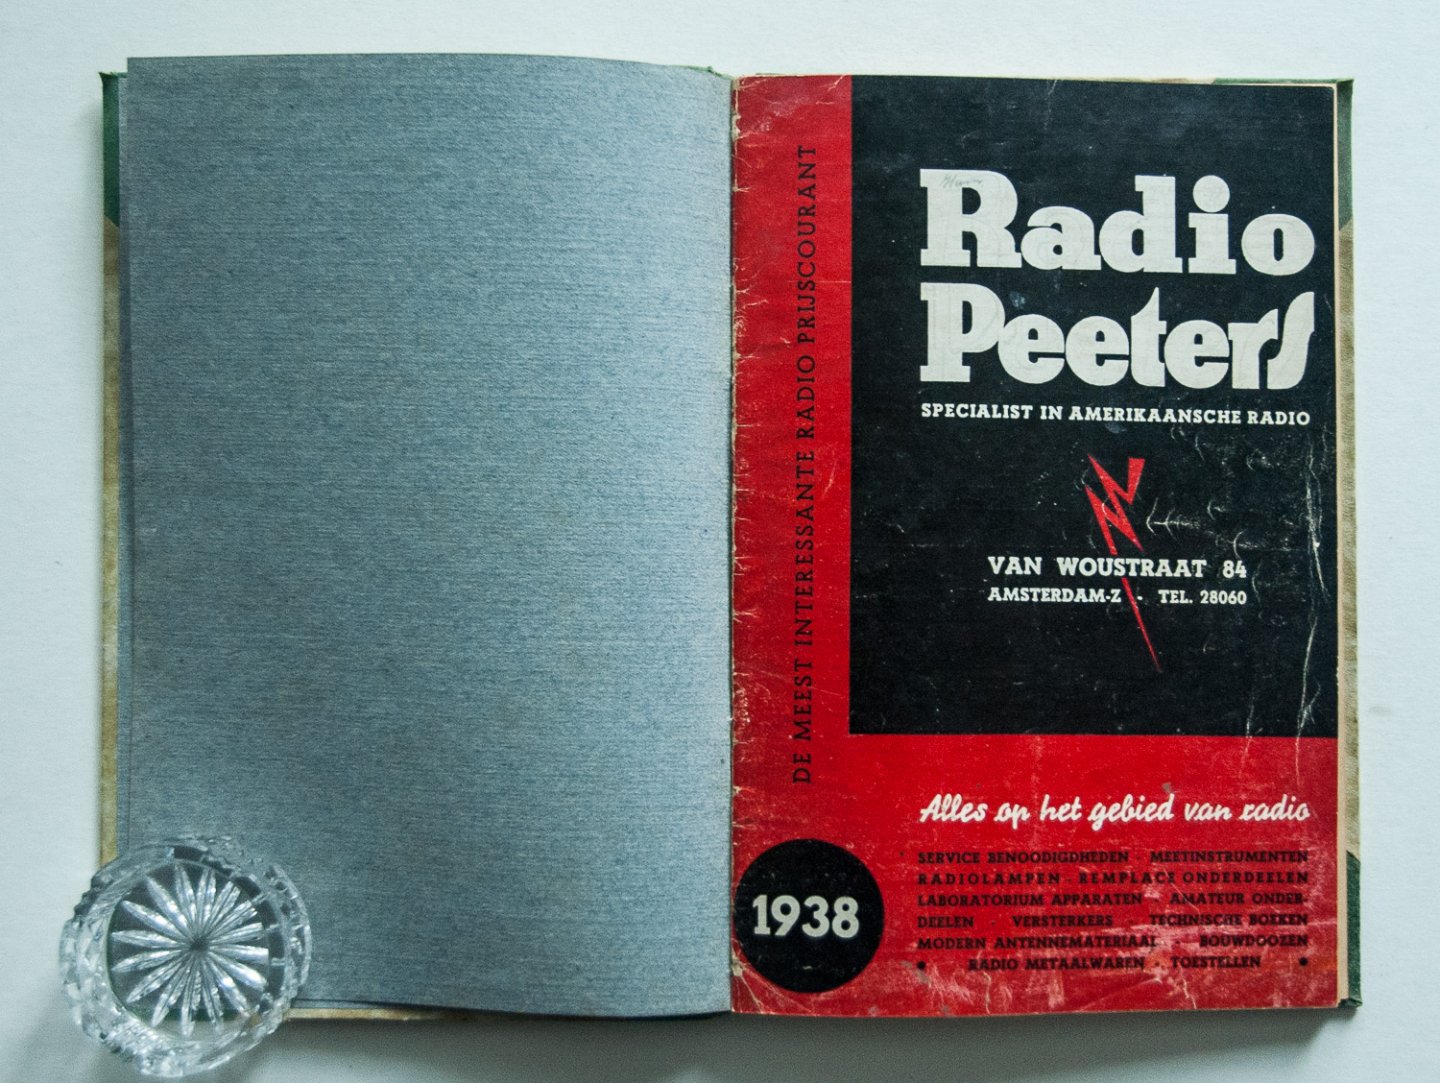  - Radio Peeters - Specialist in Amerikaanse Radio